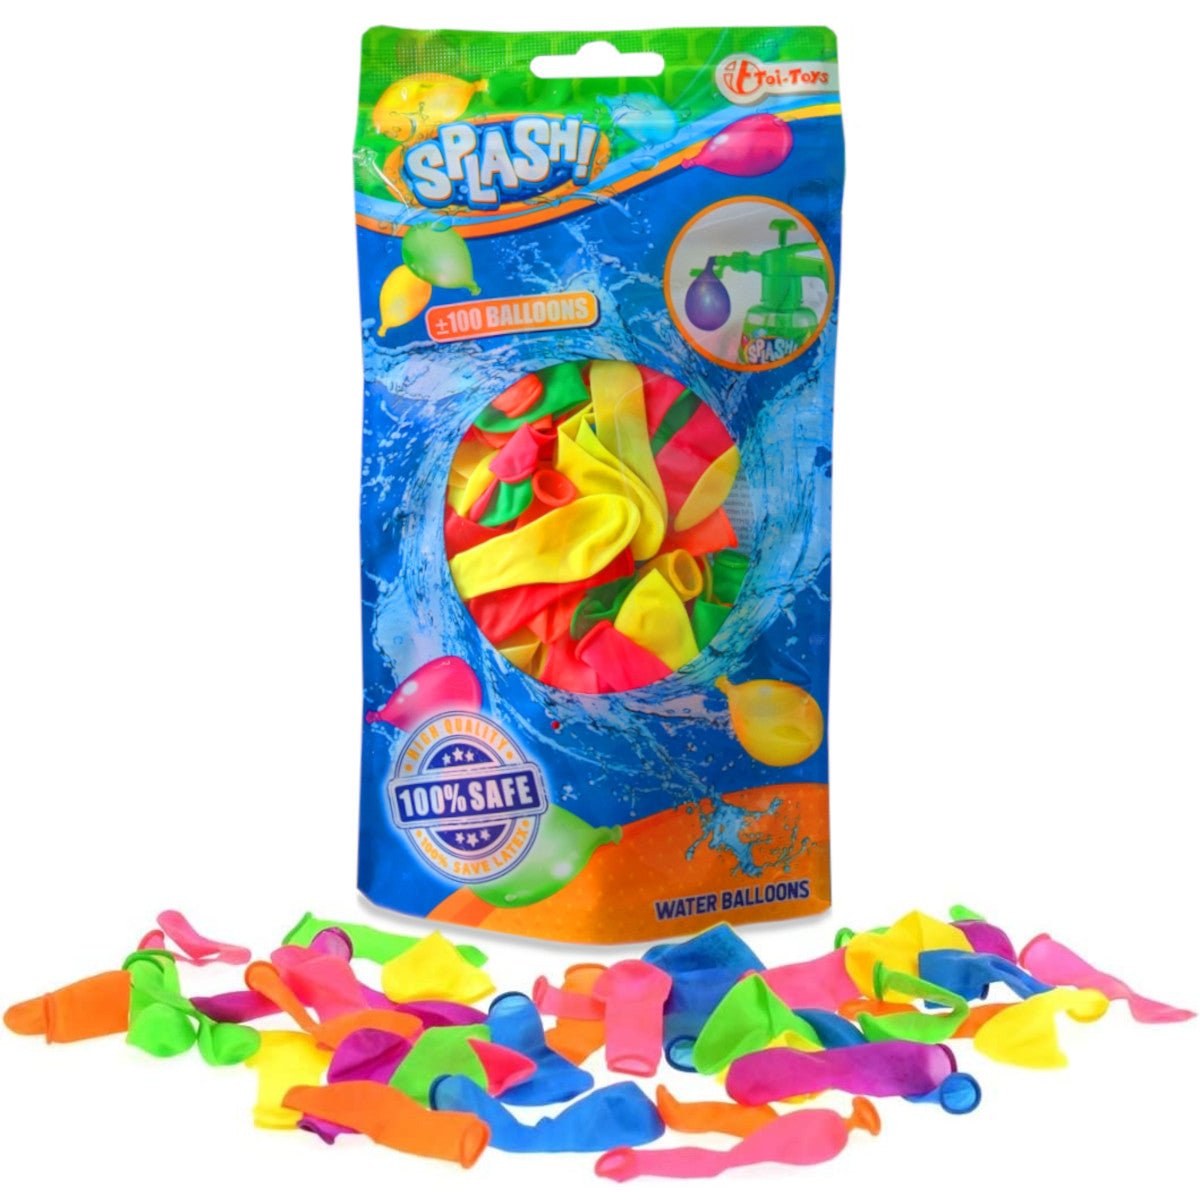 Toi-Toys - SPLASH HQ Wasserballons, 100 Stück - Poolpirat